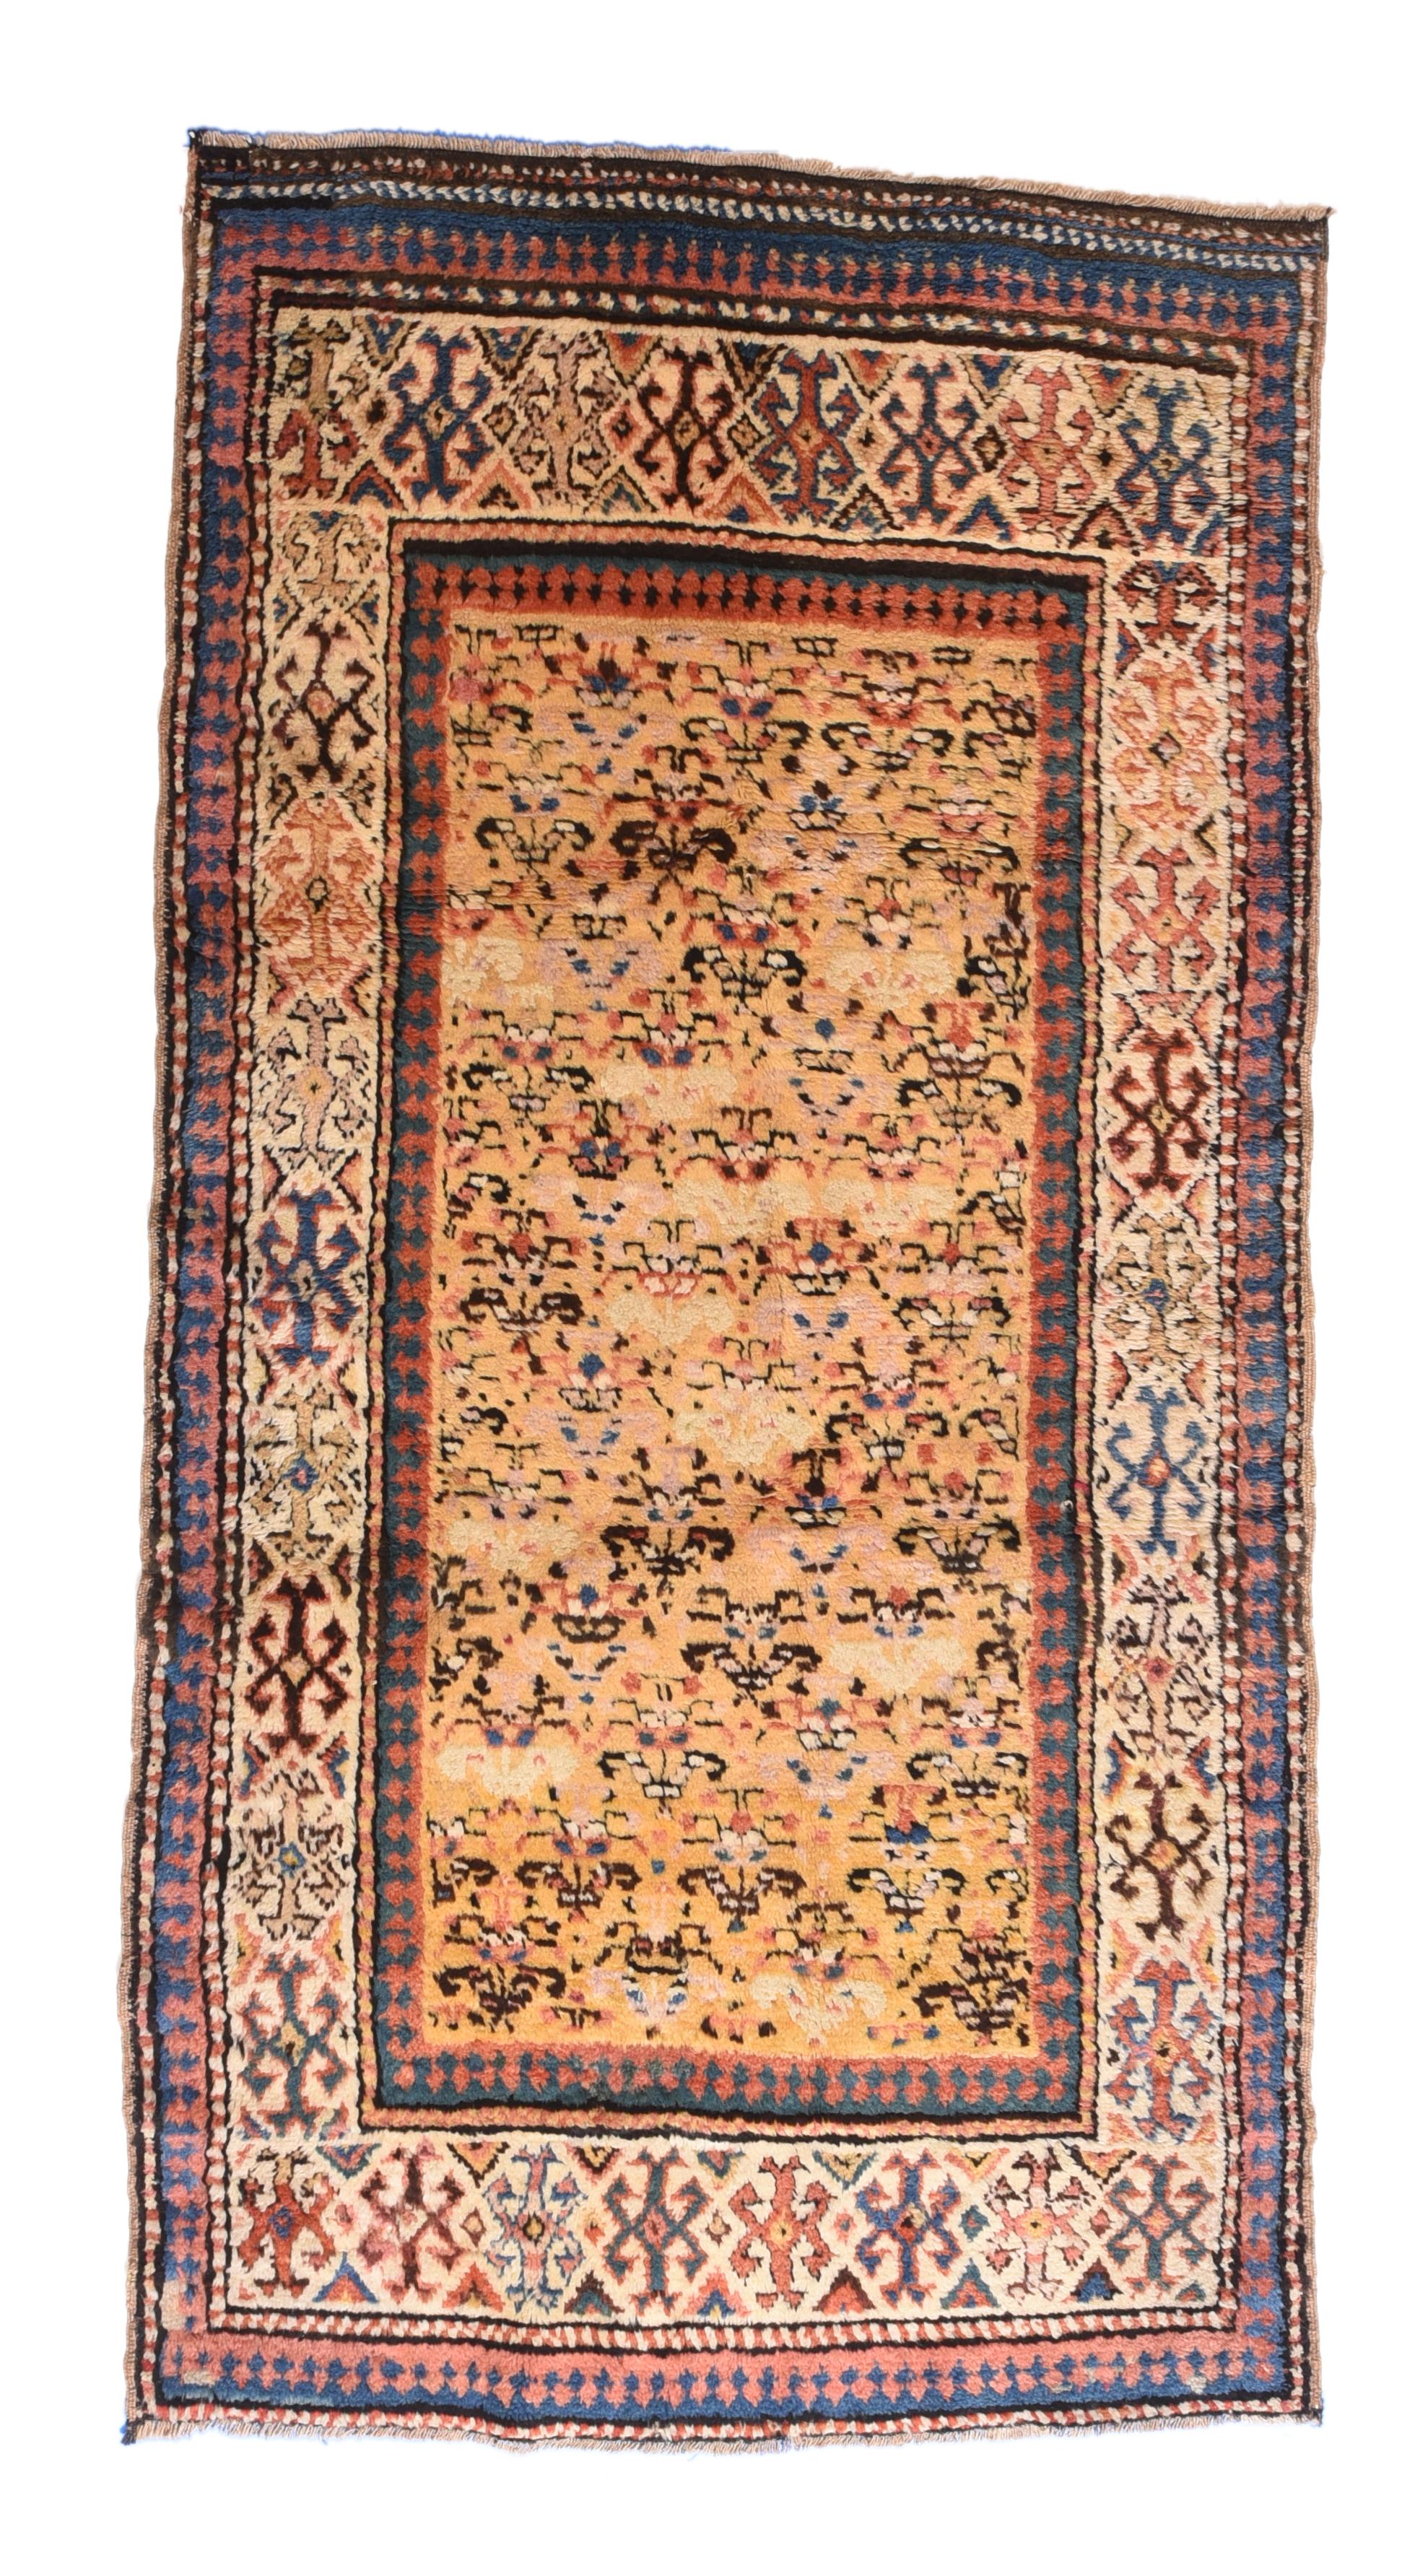 Russian Antique Persian Kurdish Area Rug For Sale